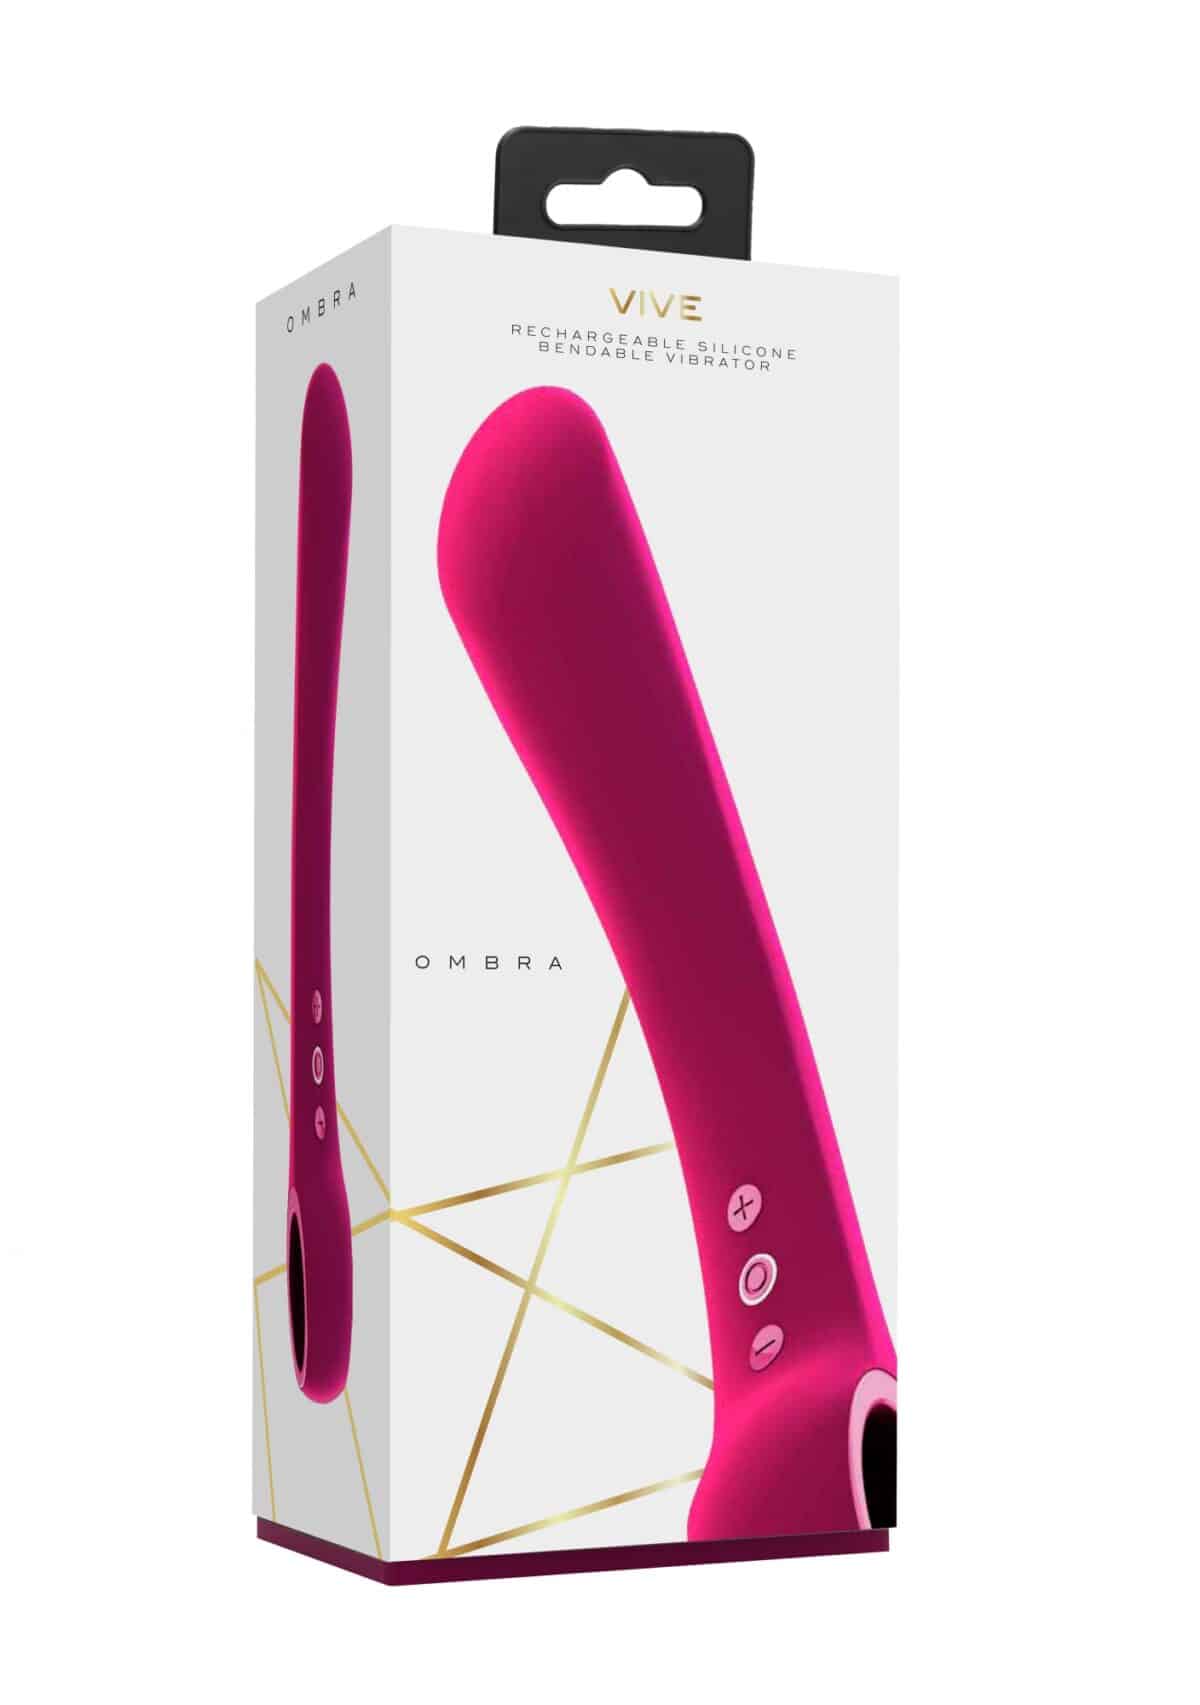 Ombra Bendable Vibrator Pink